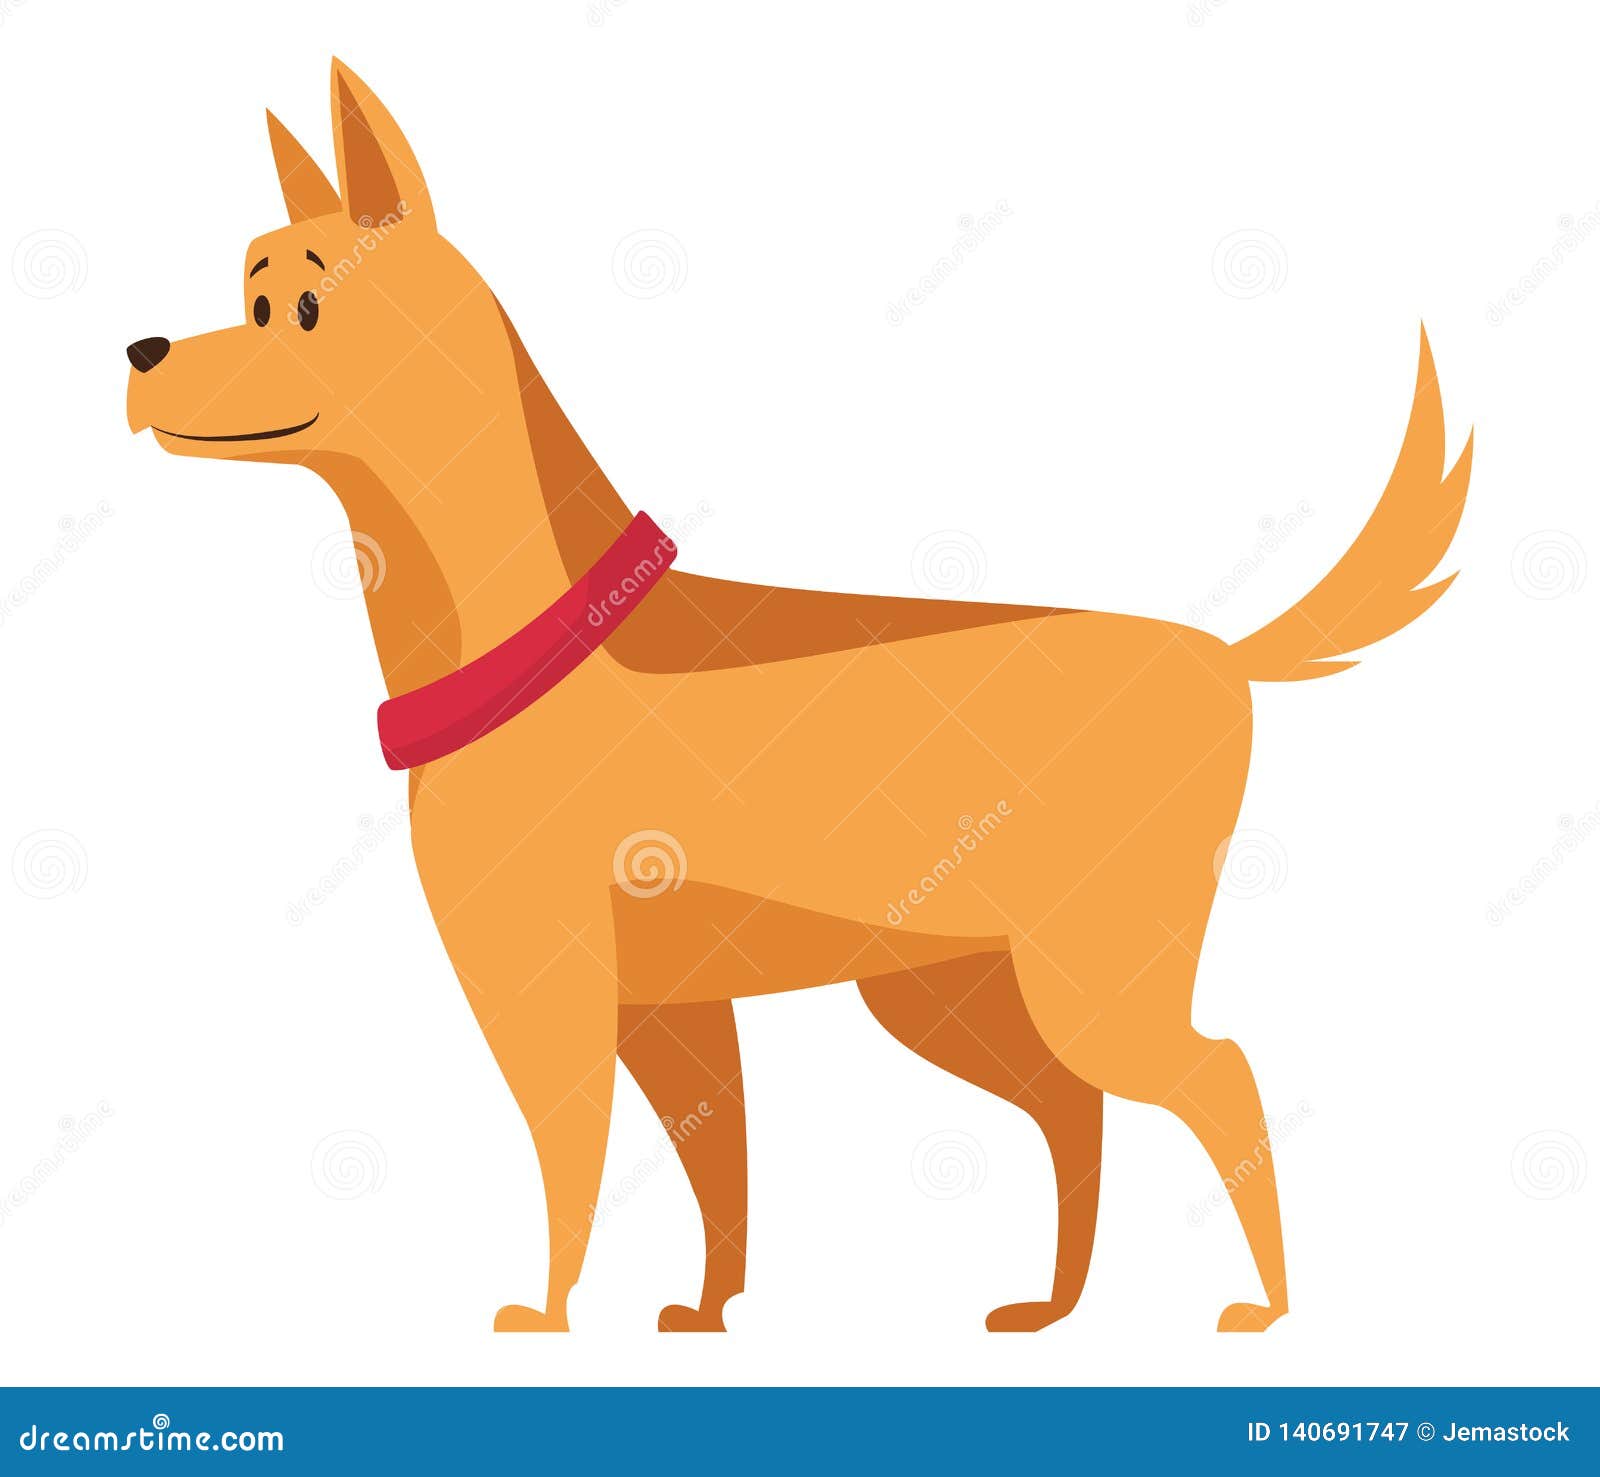 Rottweiler dog Avatar by Bluepentool 2 on Dribbble